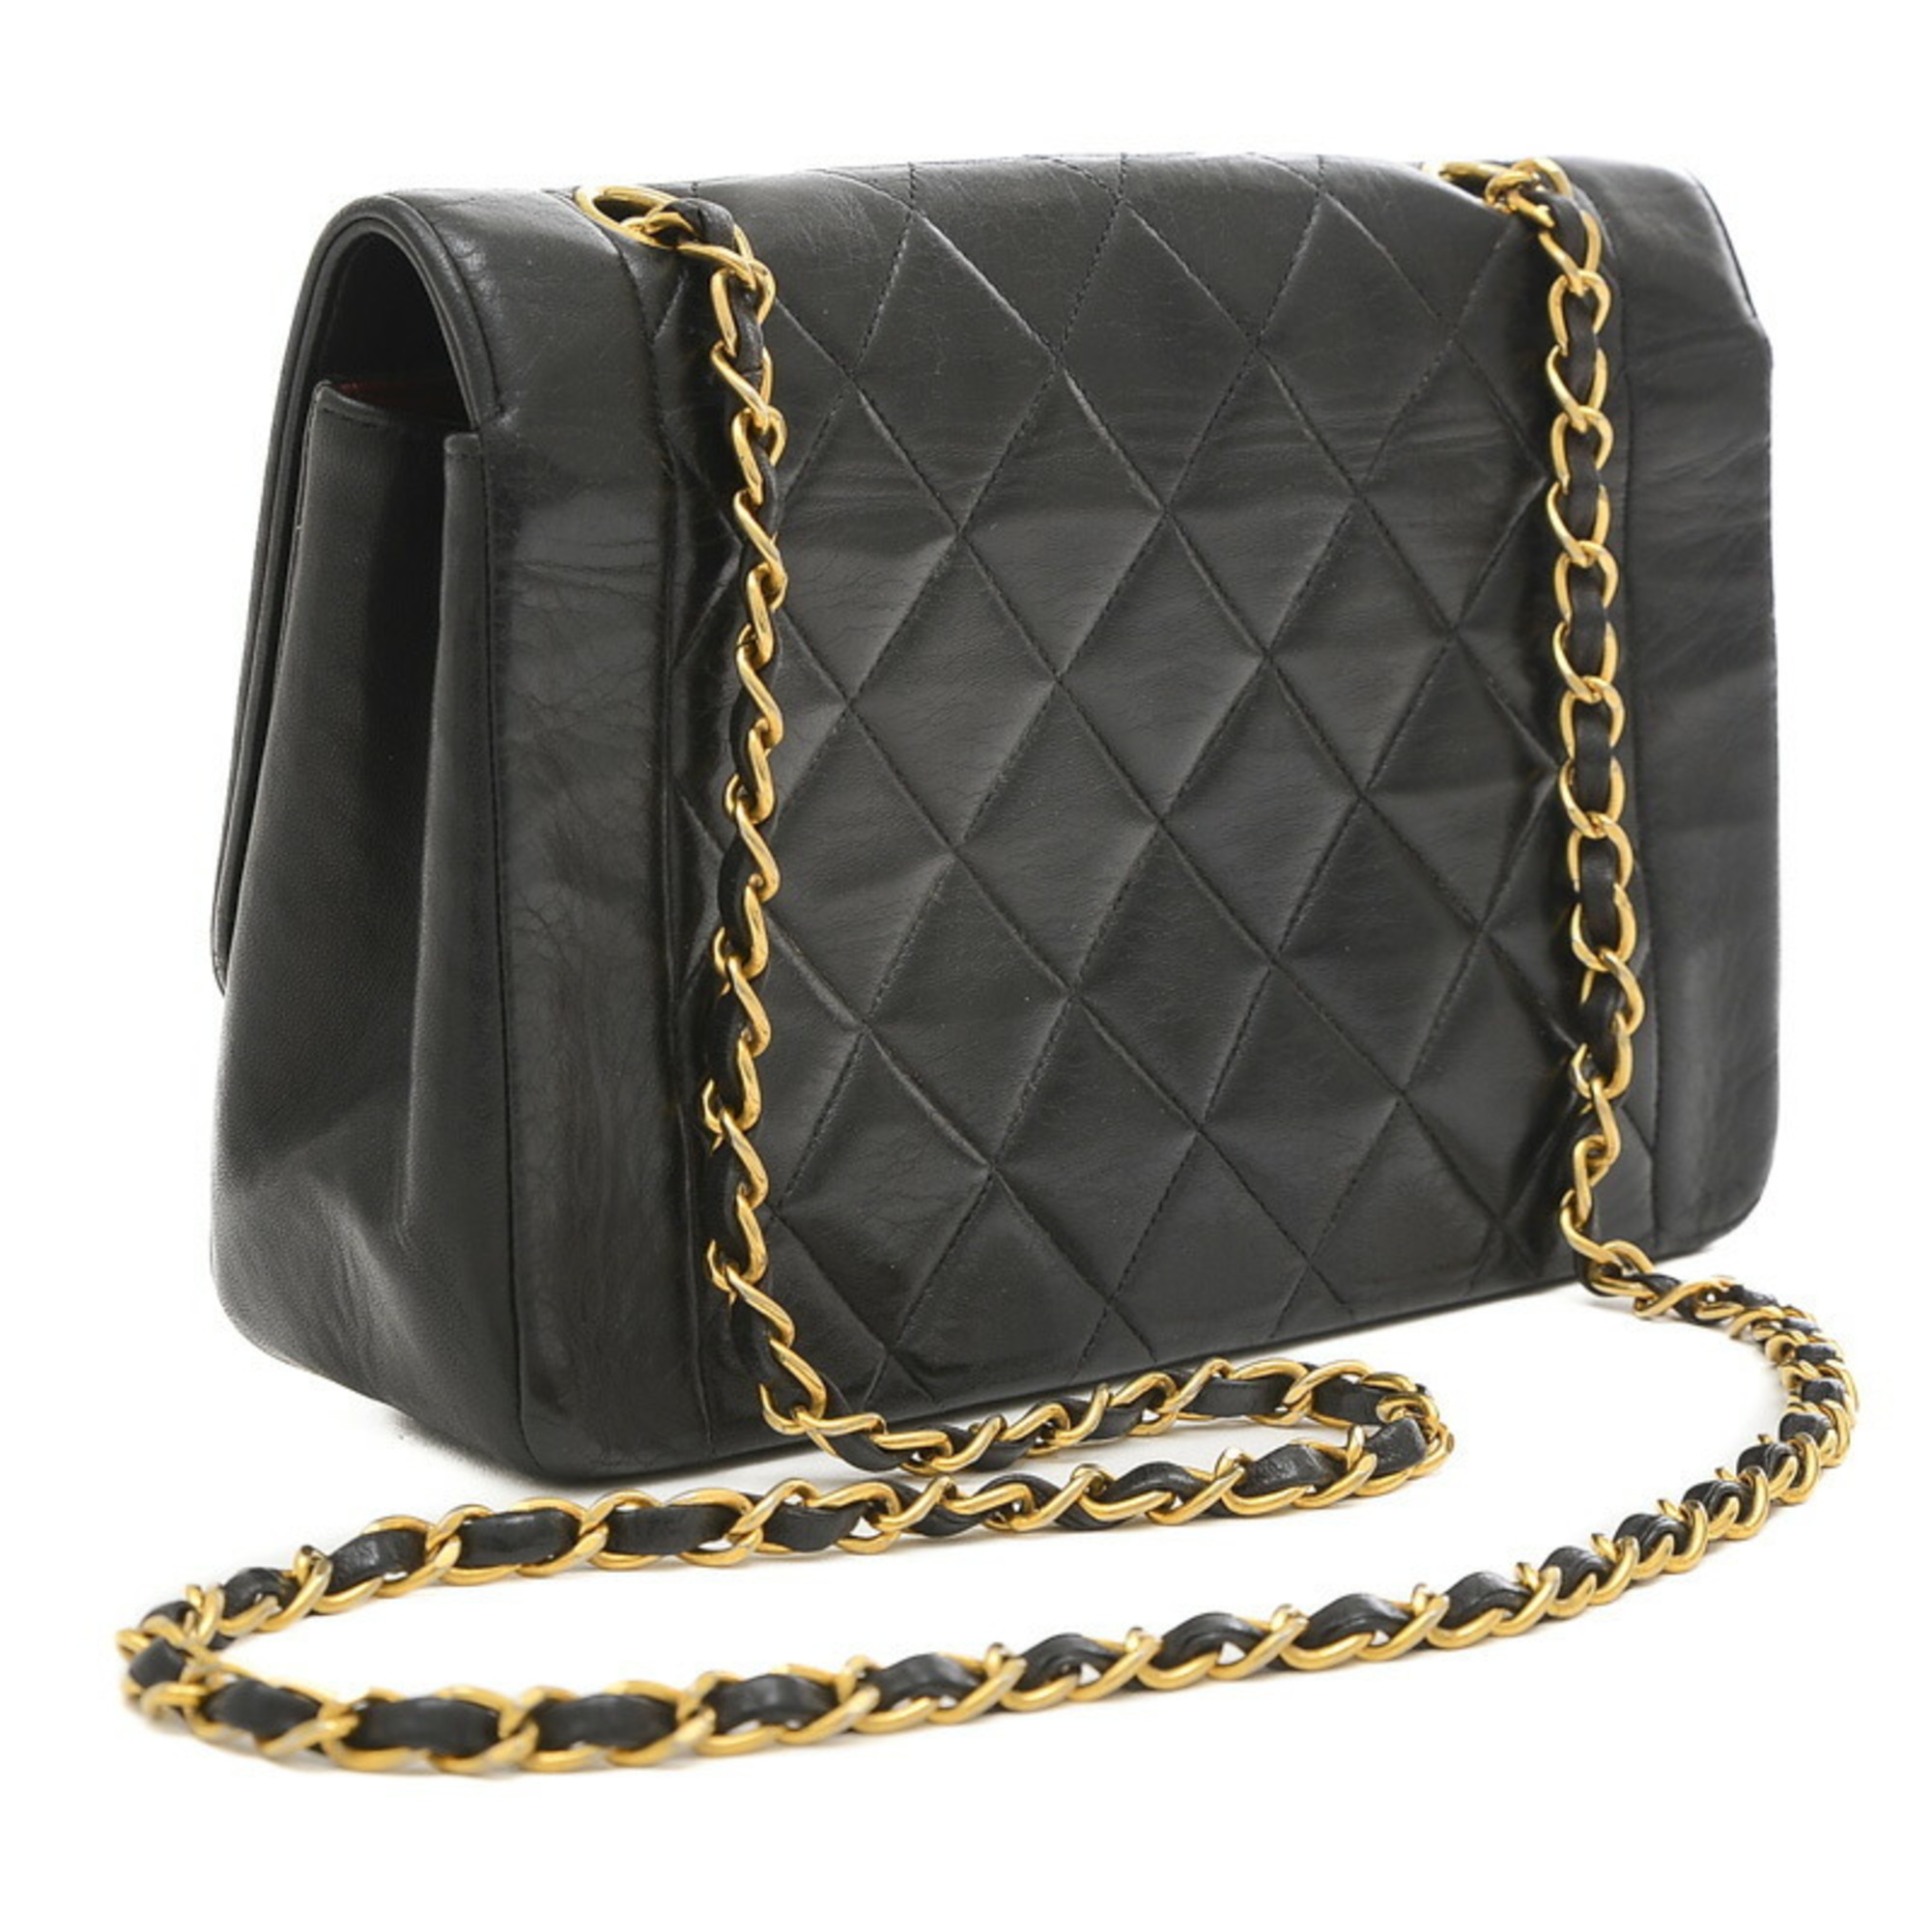 Chanel Matelasse Diana Single Chain Shoulder Bag in Lambskin Black